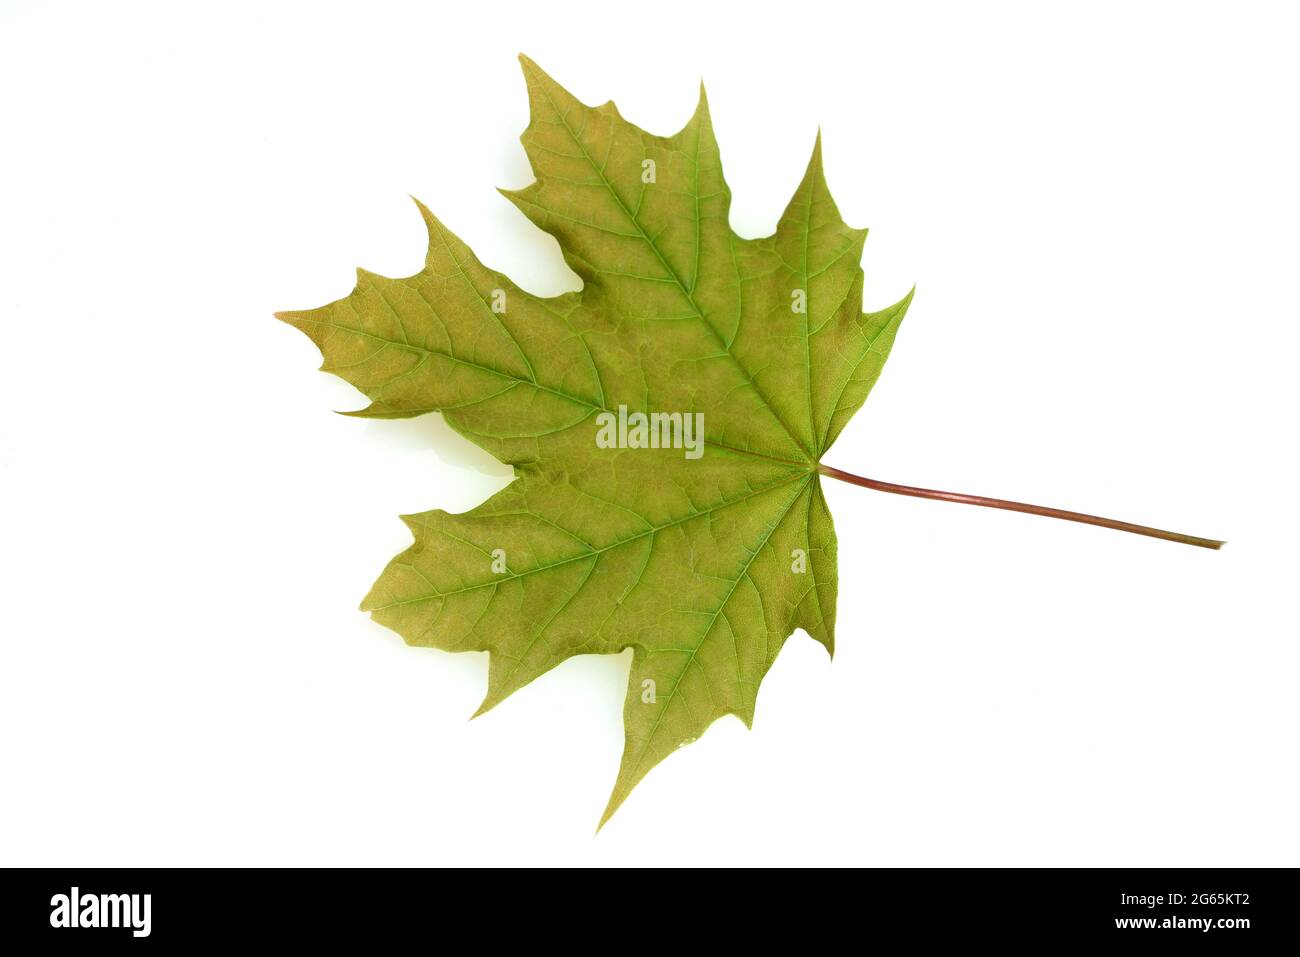 Ahorn, Acer, ist eine heimische Baumart. L'acero, Acer, è una specie di alberi autoctoni. Foto Stock